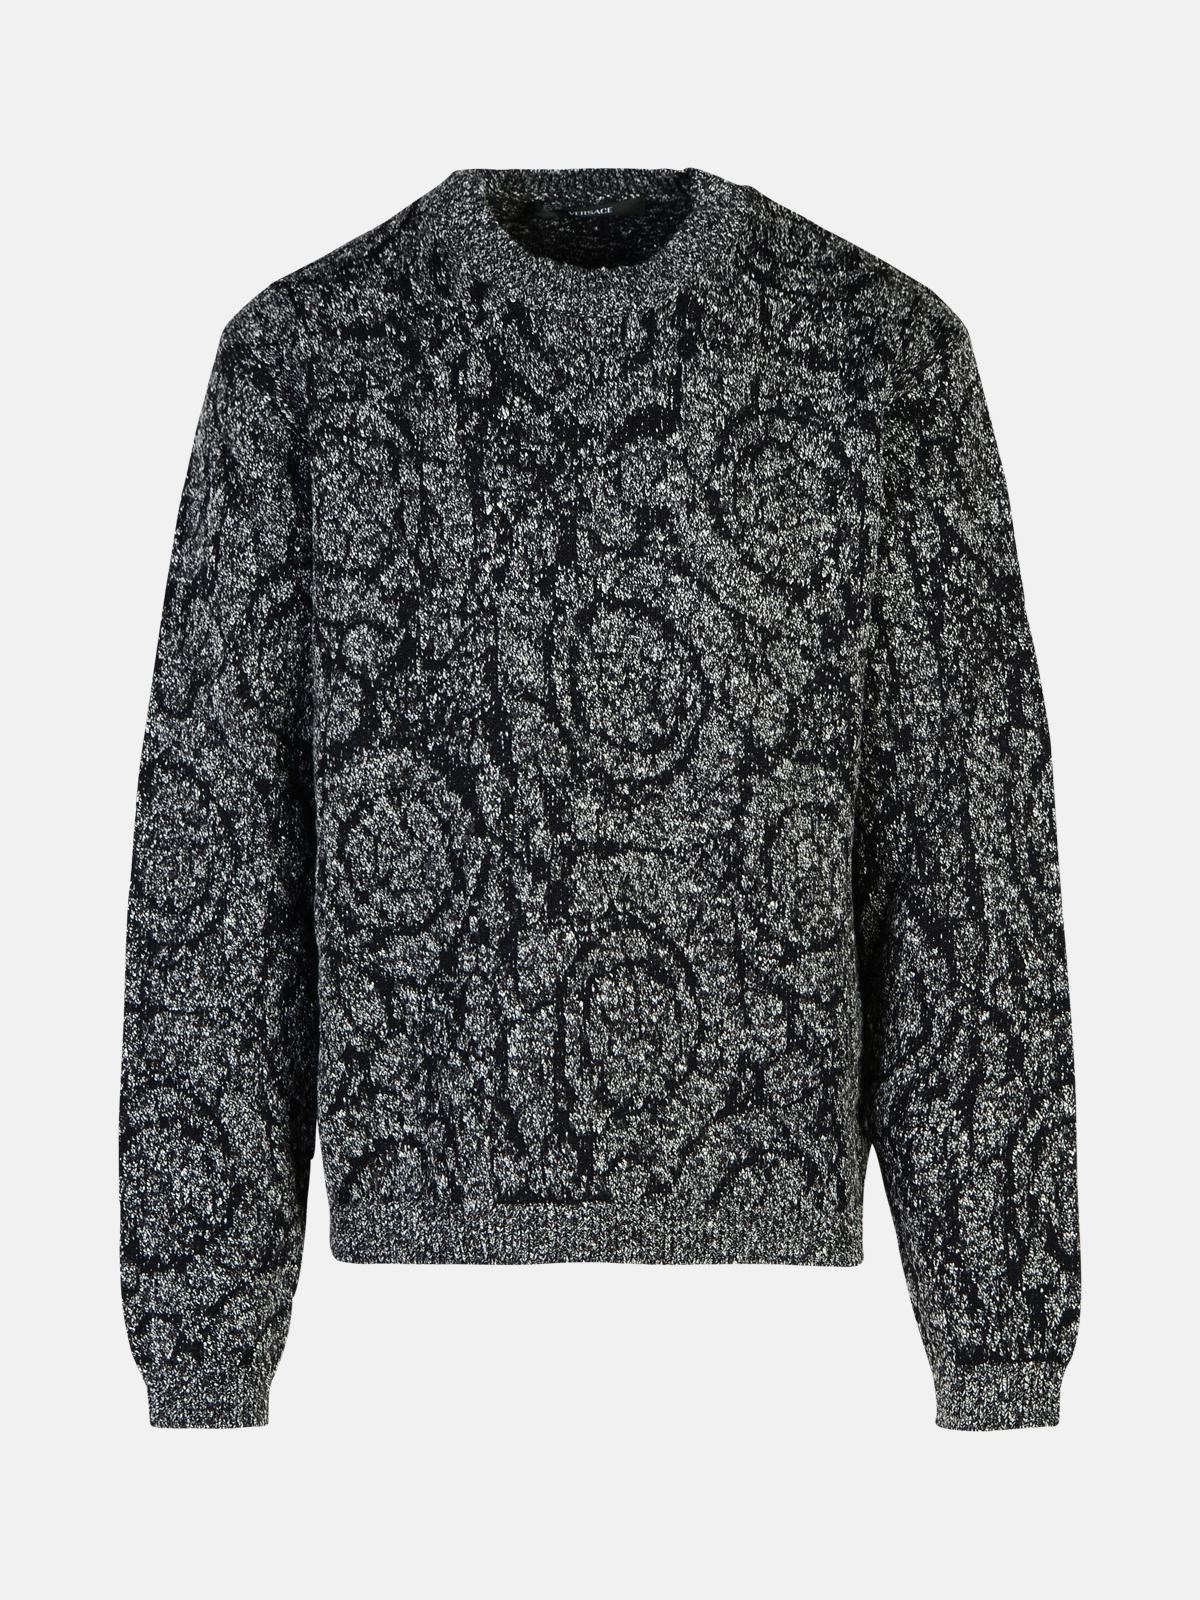 Versace 'barocco' Black Cotton Blend Sweater